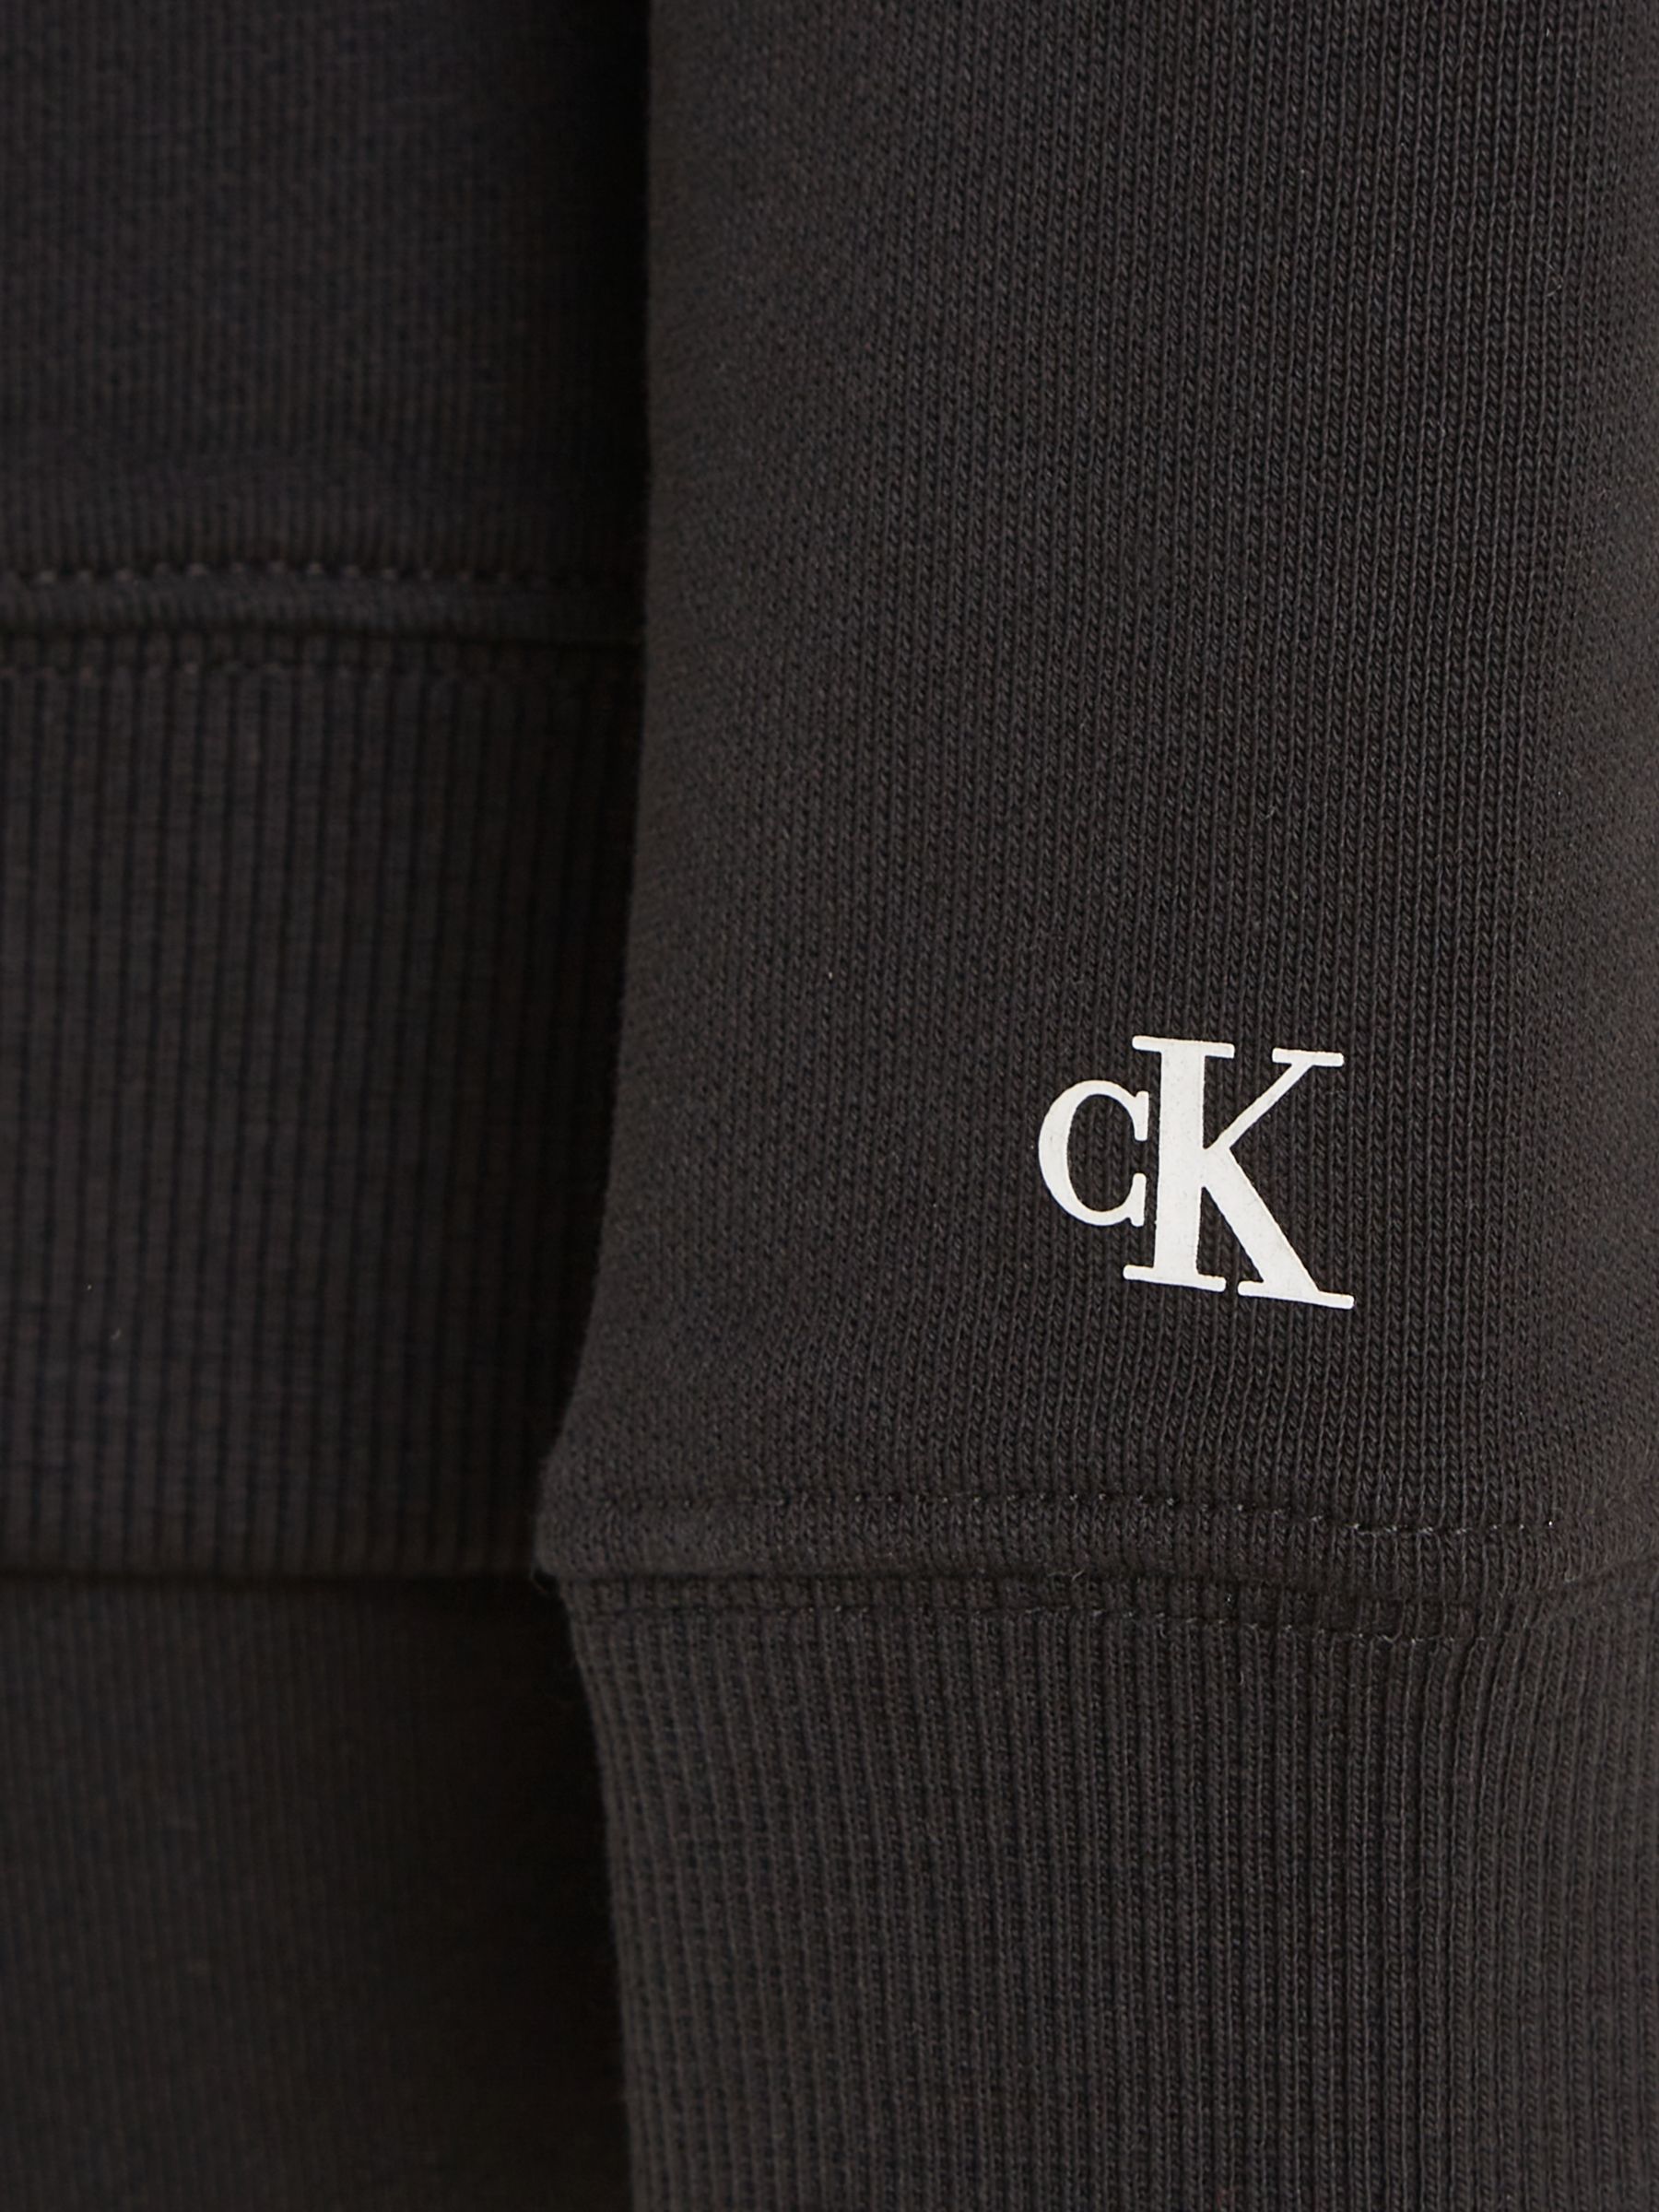 Calvin Klein Kids' Cotton Logo Sweatshirt & Joggers Set, Ck Black, 10 years